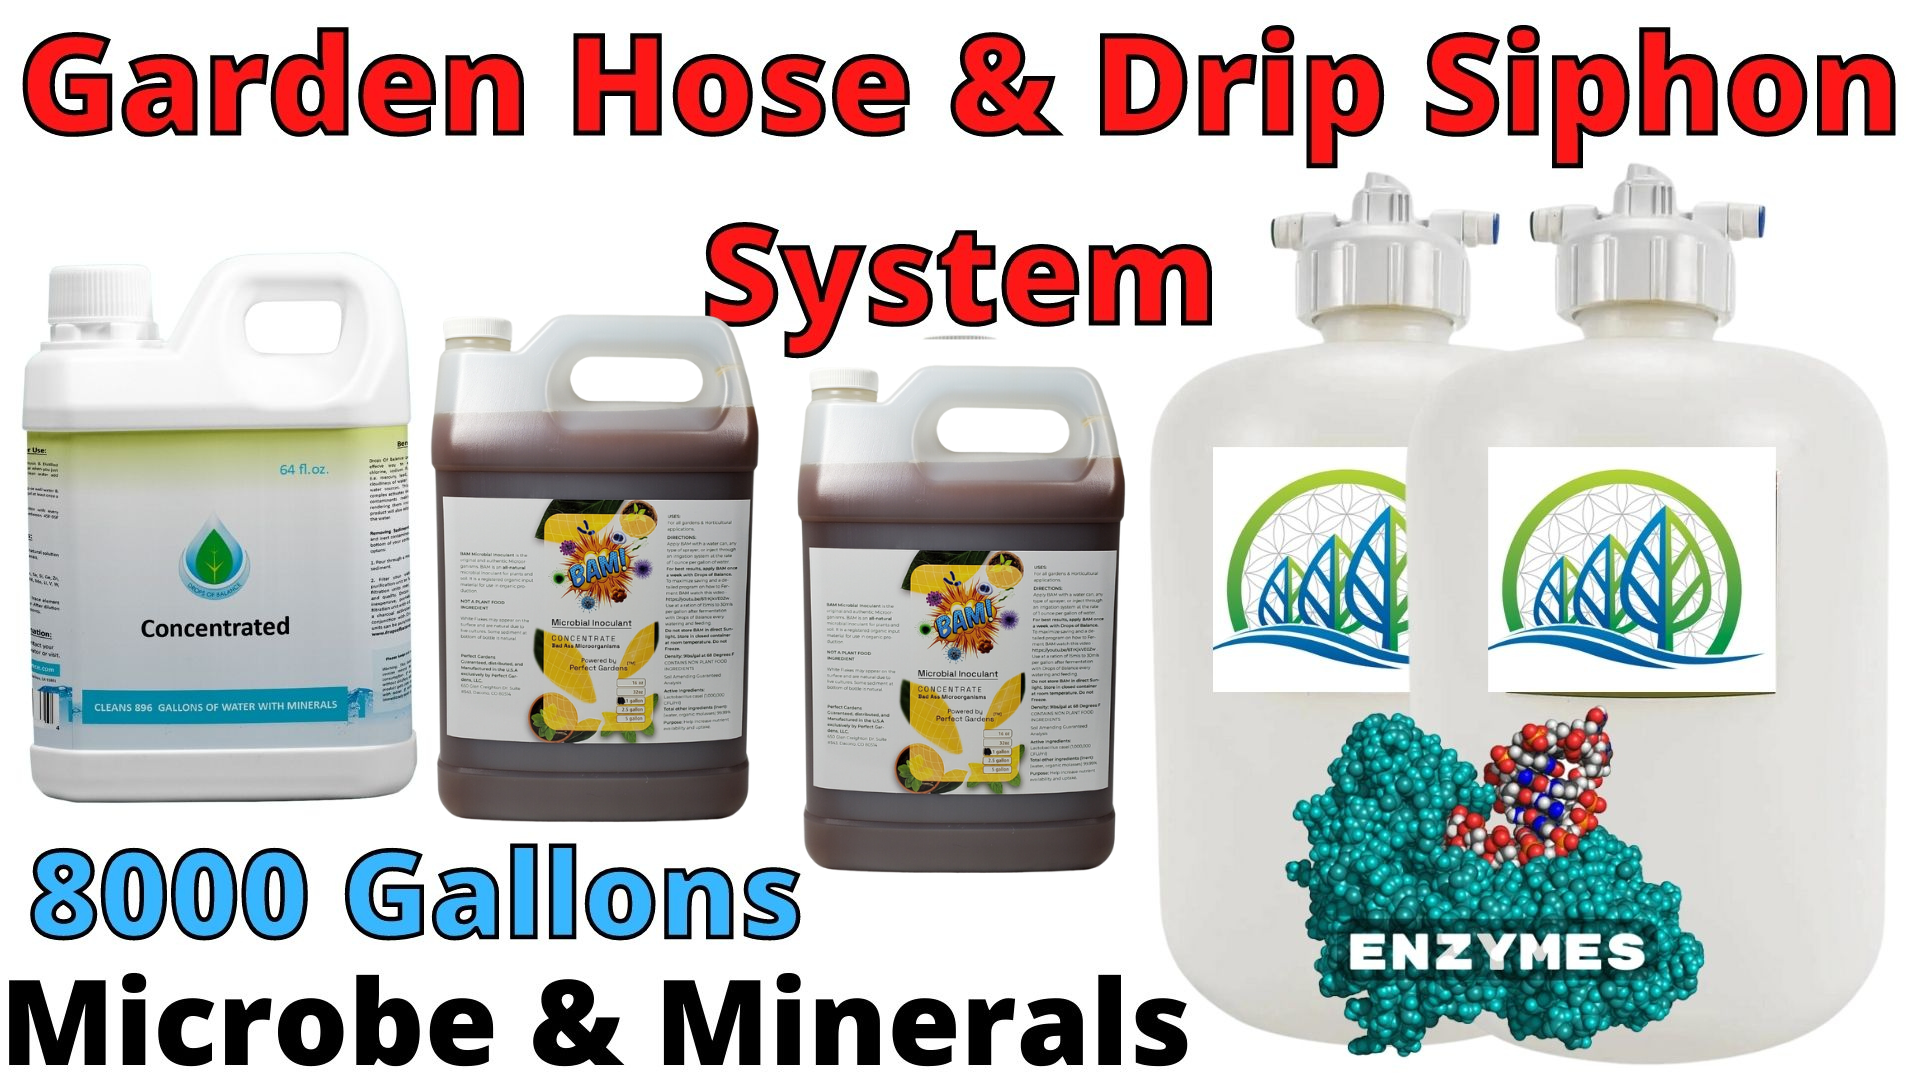 Garden Hose & Drip Siphon Enzymatic Production System